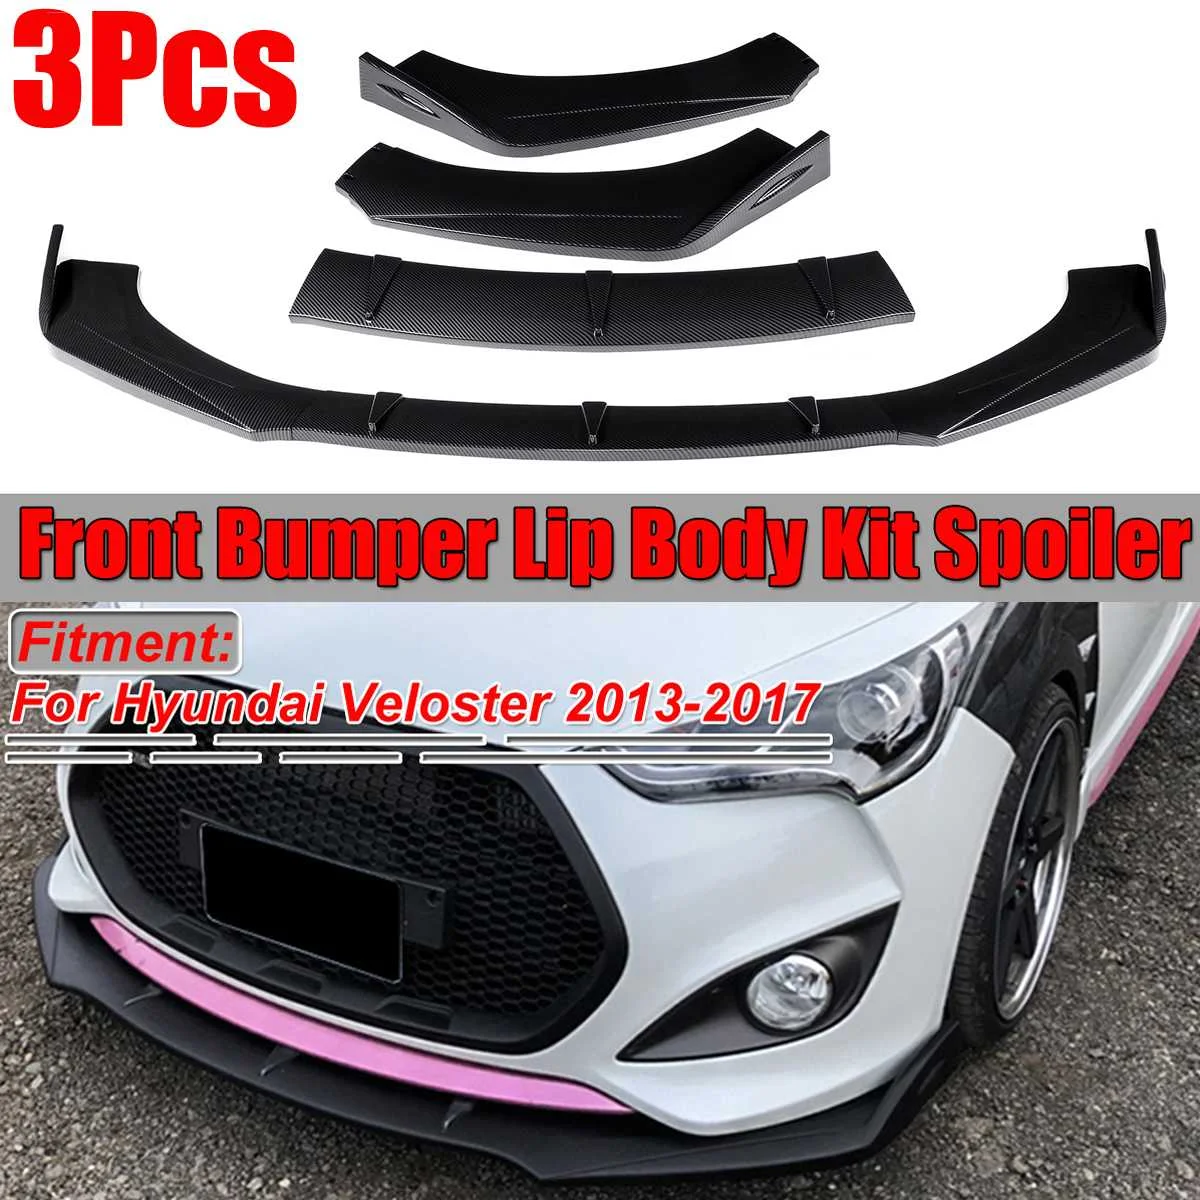 

3Pcs Car Front Bumper Splitter Lip Body Kit Spoiler Diffuser Deflector Protector Guard For Hyundai For Veloster 2013-2017